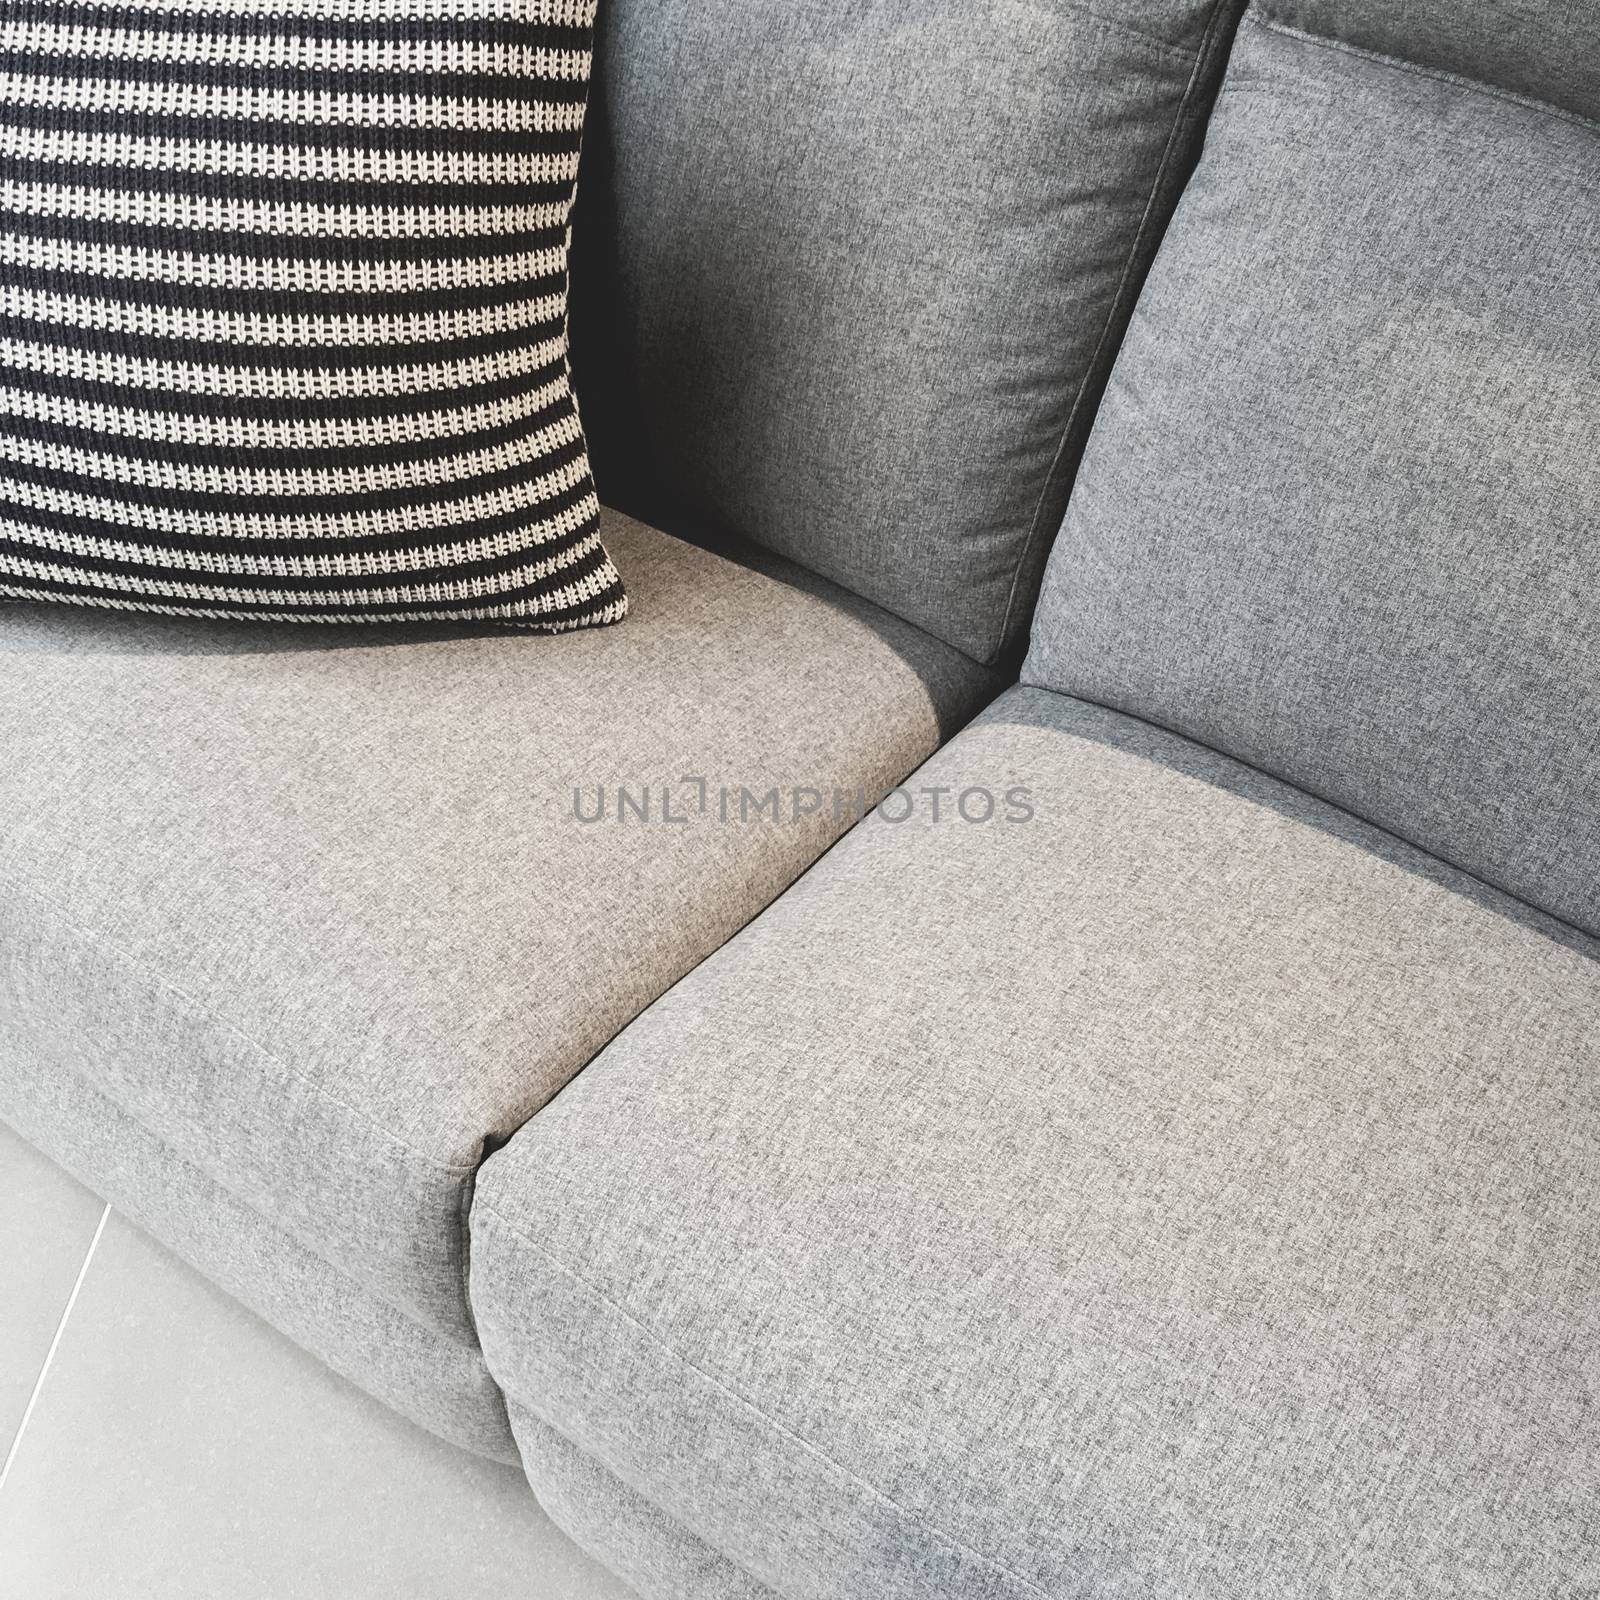 Striped cushion decorating a gray textile sofa by anikasalsera